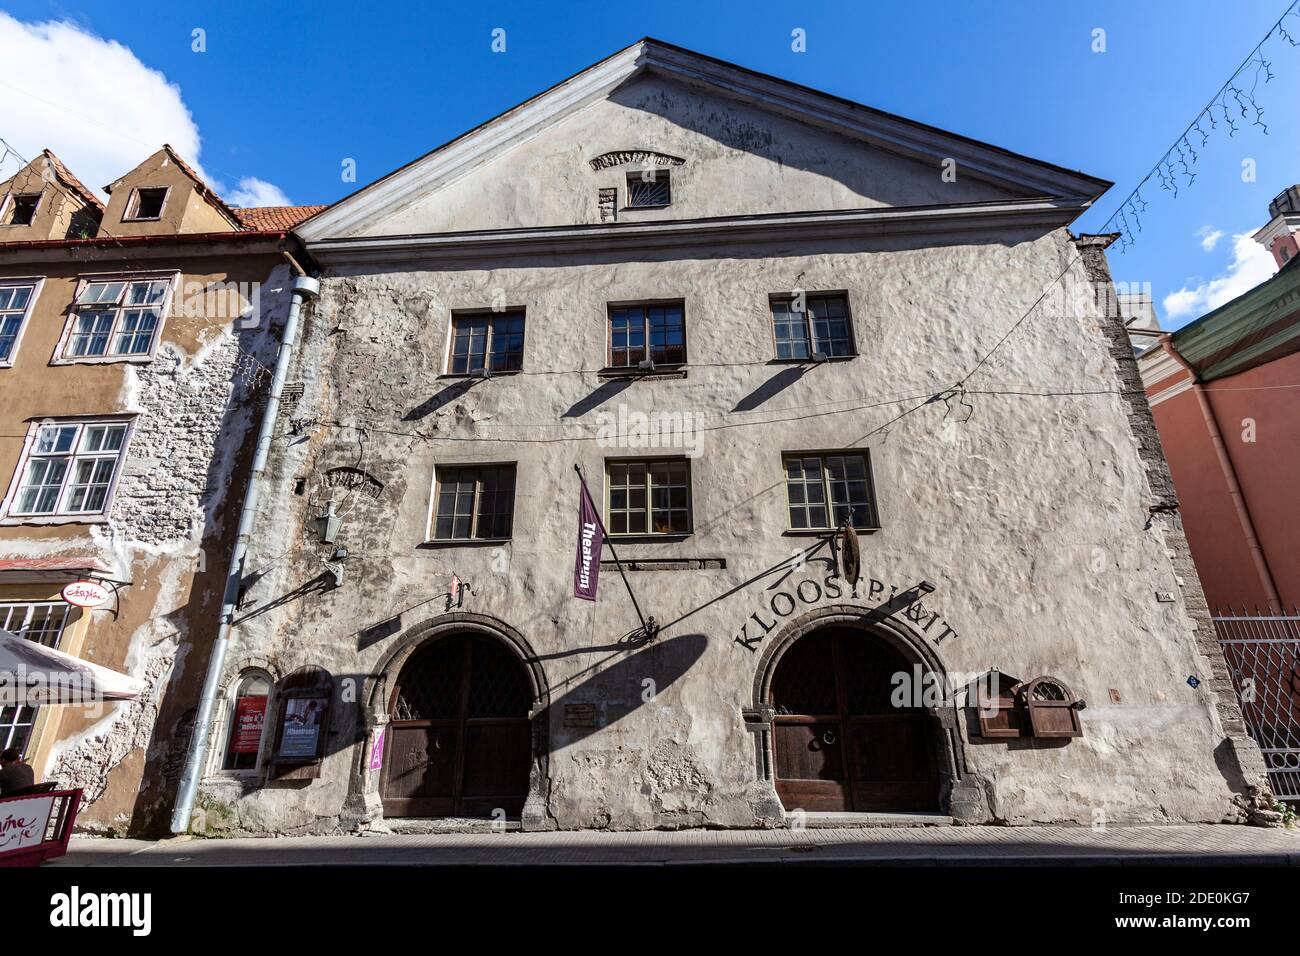 Kloostri Ait, Vene, Tallinn, Estonia Stock Photo